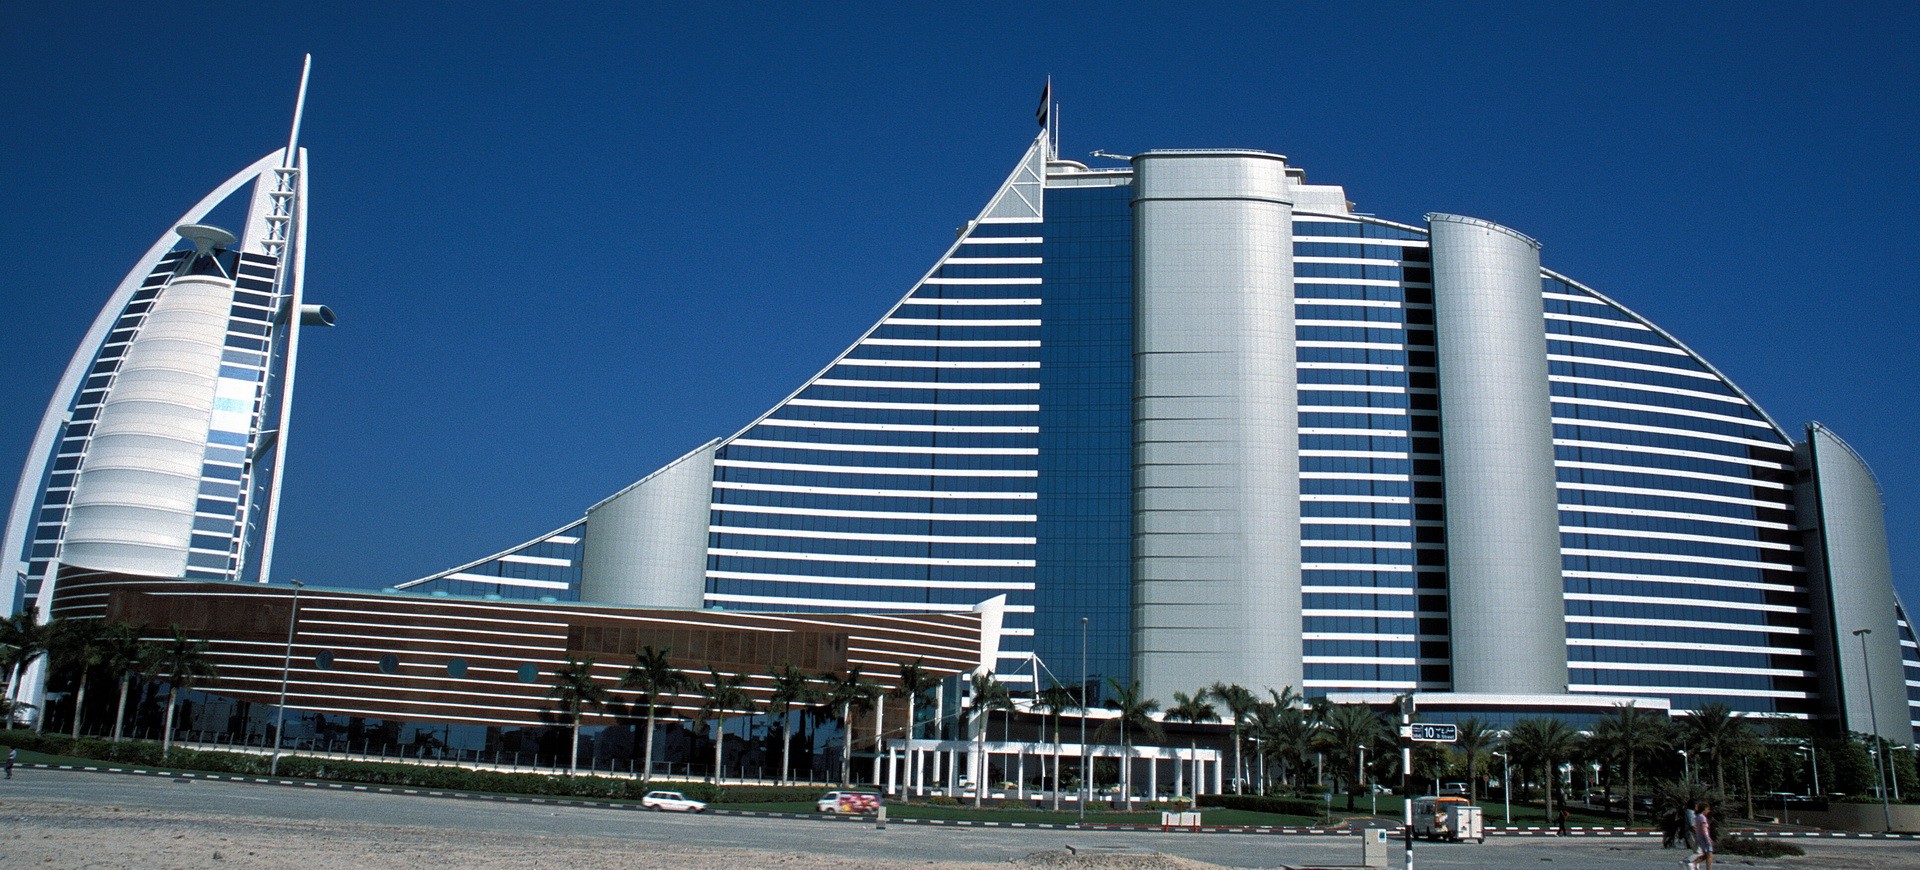 Emirats Arabes Unis Dubai Burj Al Arab & Jumeirah Beach